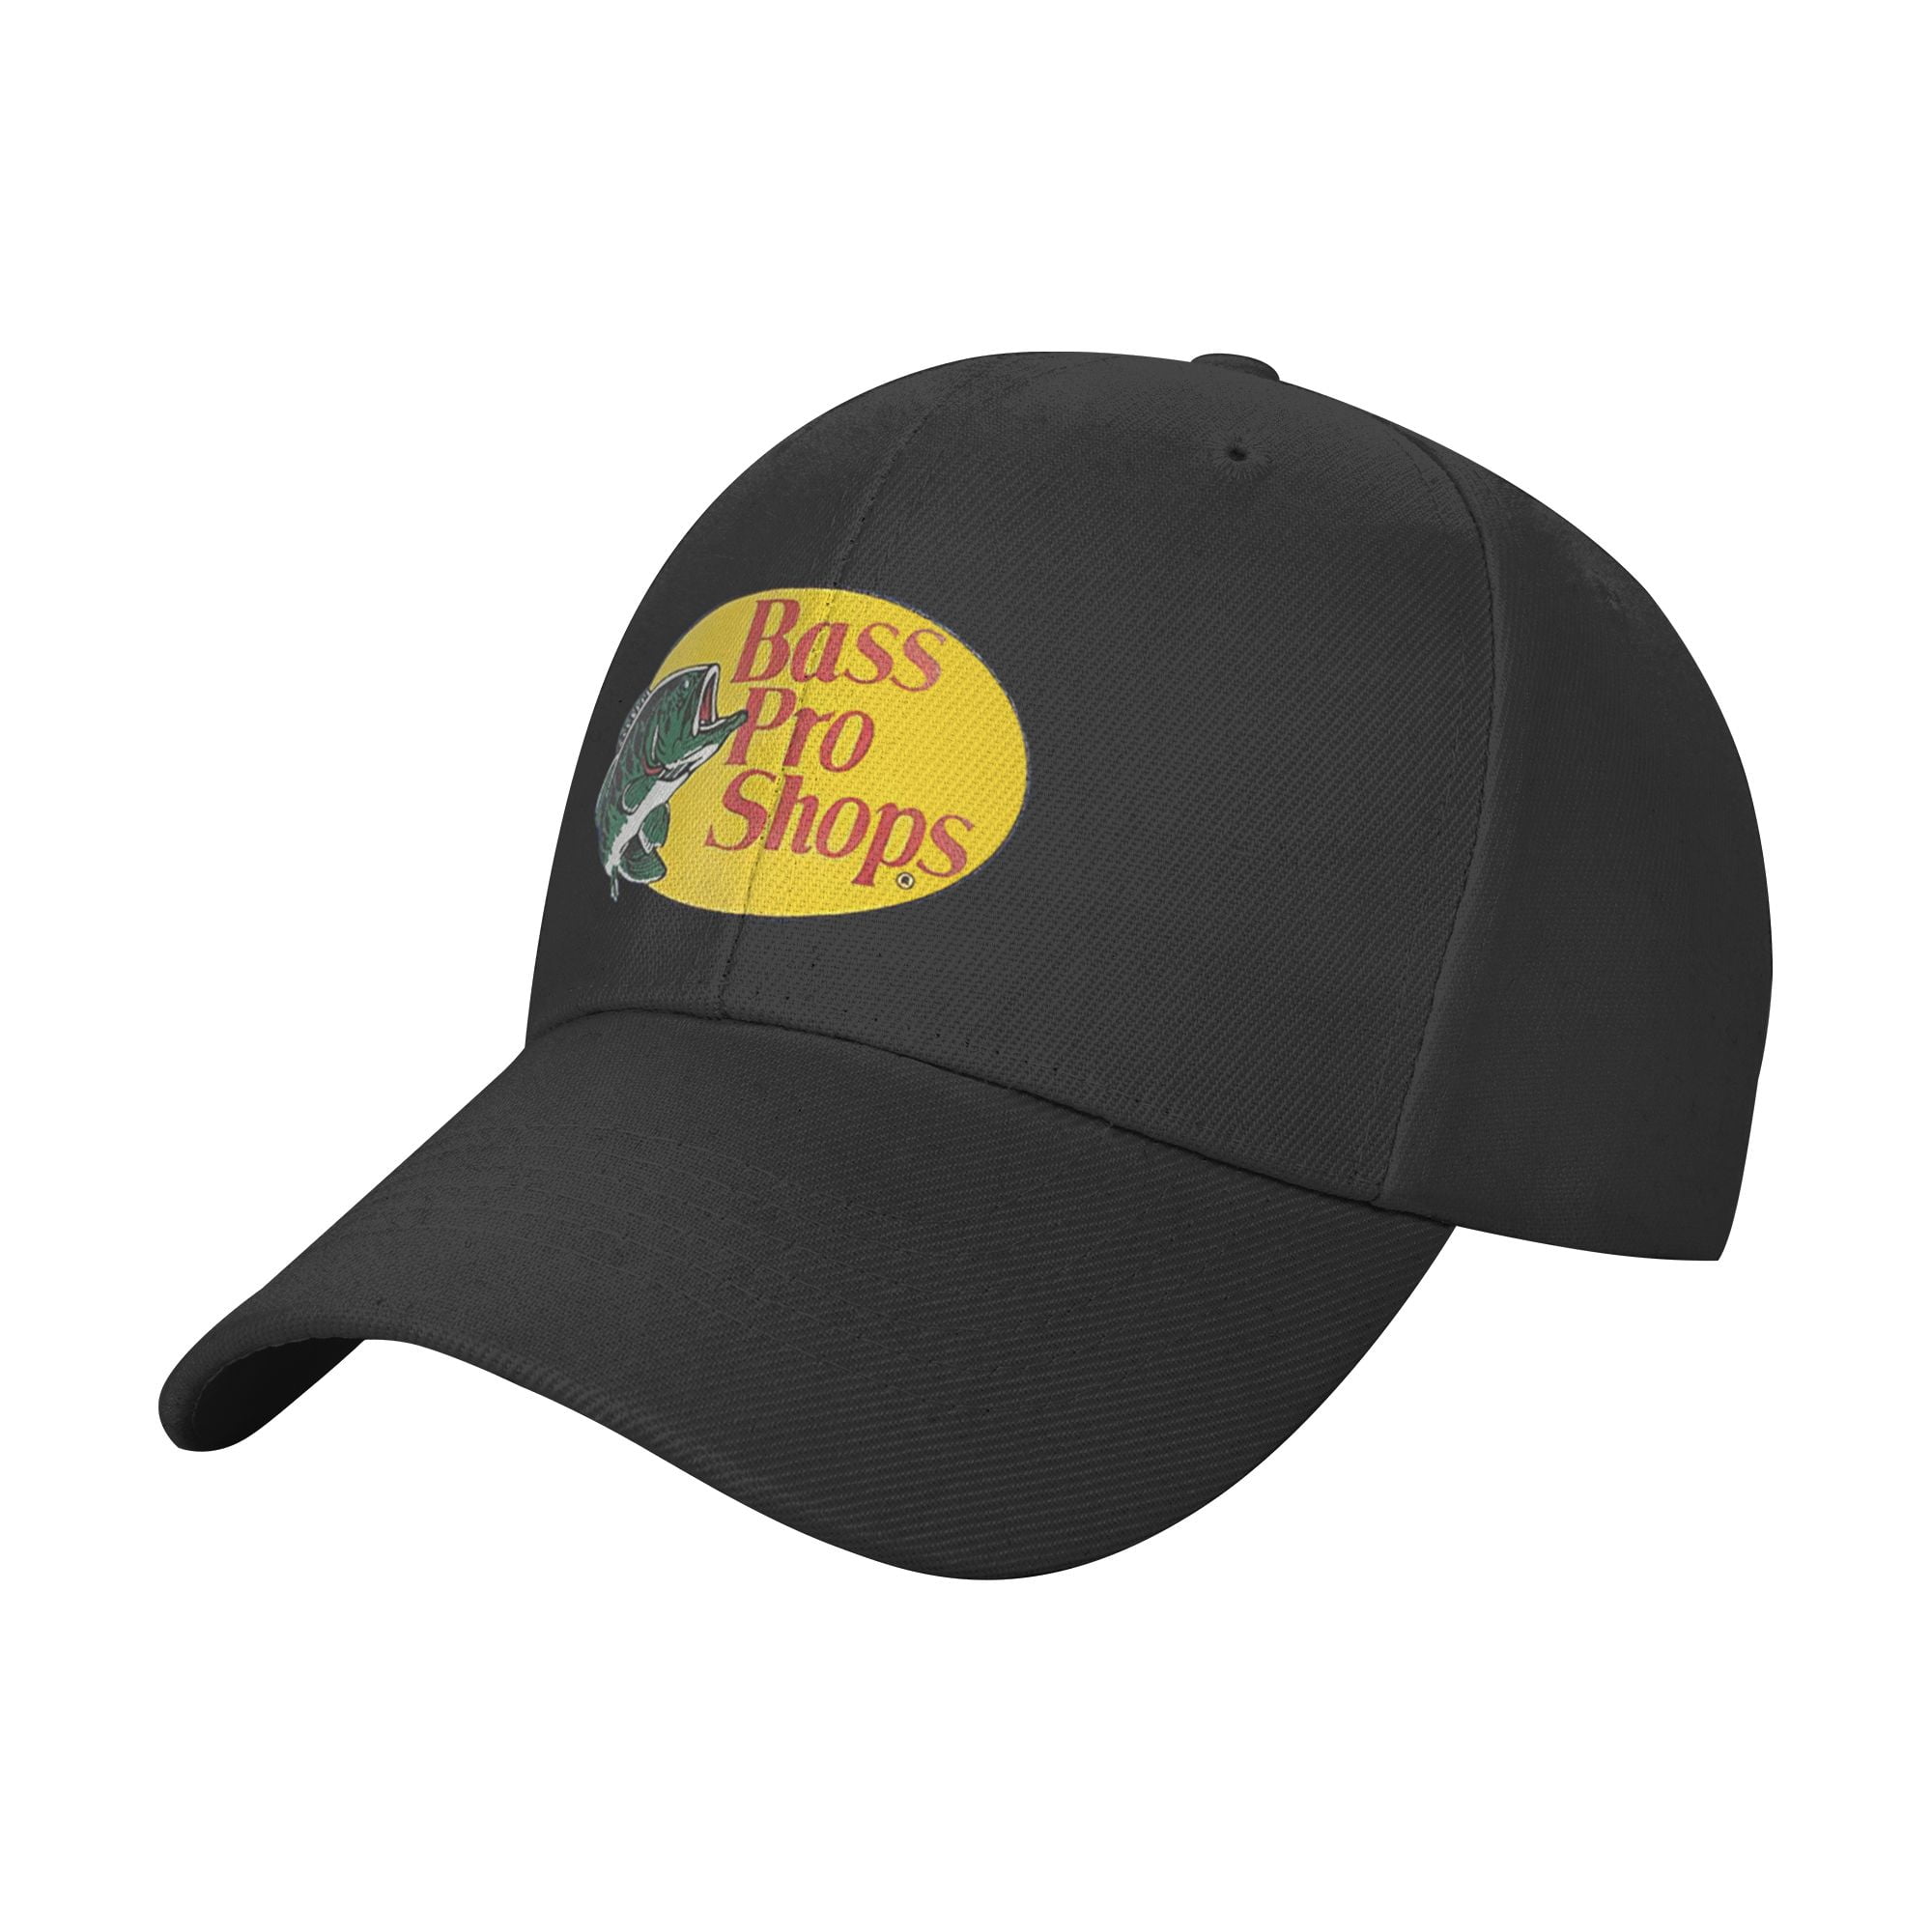 Bass Pro Shop Casquette Black Adjustable Mesh Baseball Cap for Hat Fishing  Hat Unisex